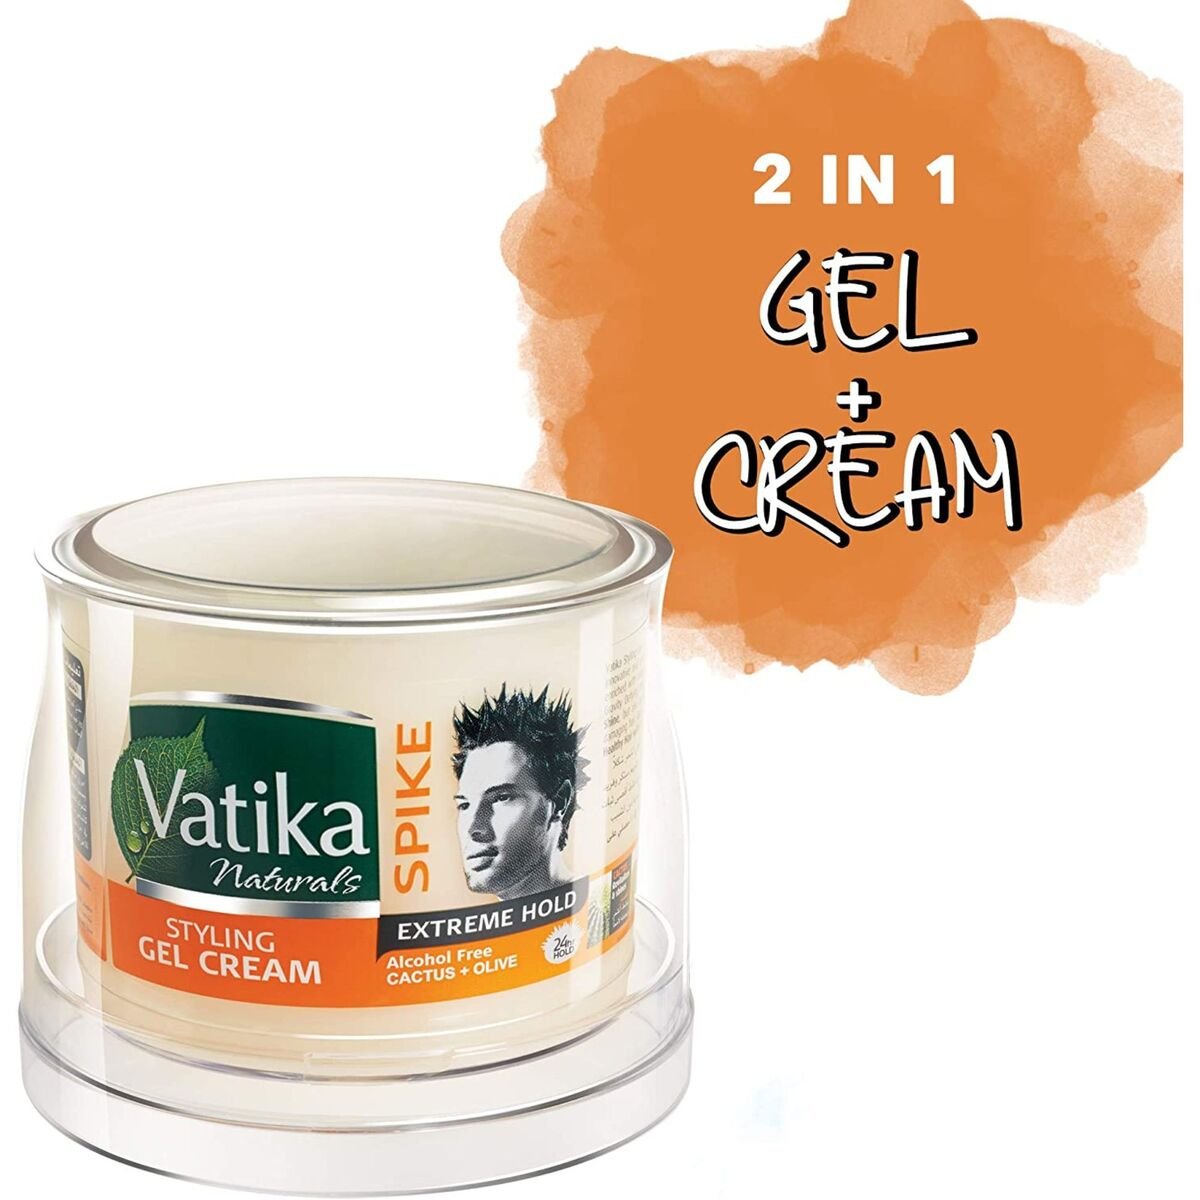 Vatika Naturals Spike Extreme Hold Styling Gel Cream 250 ml